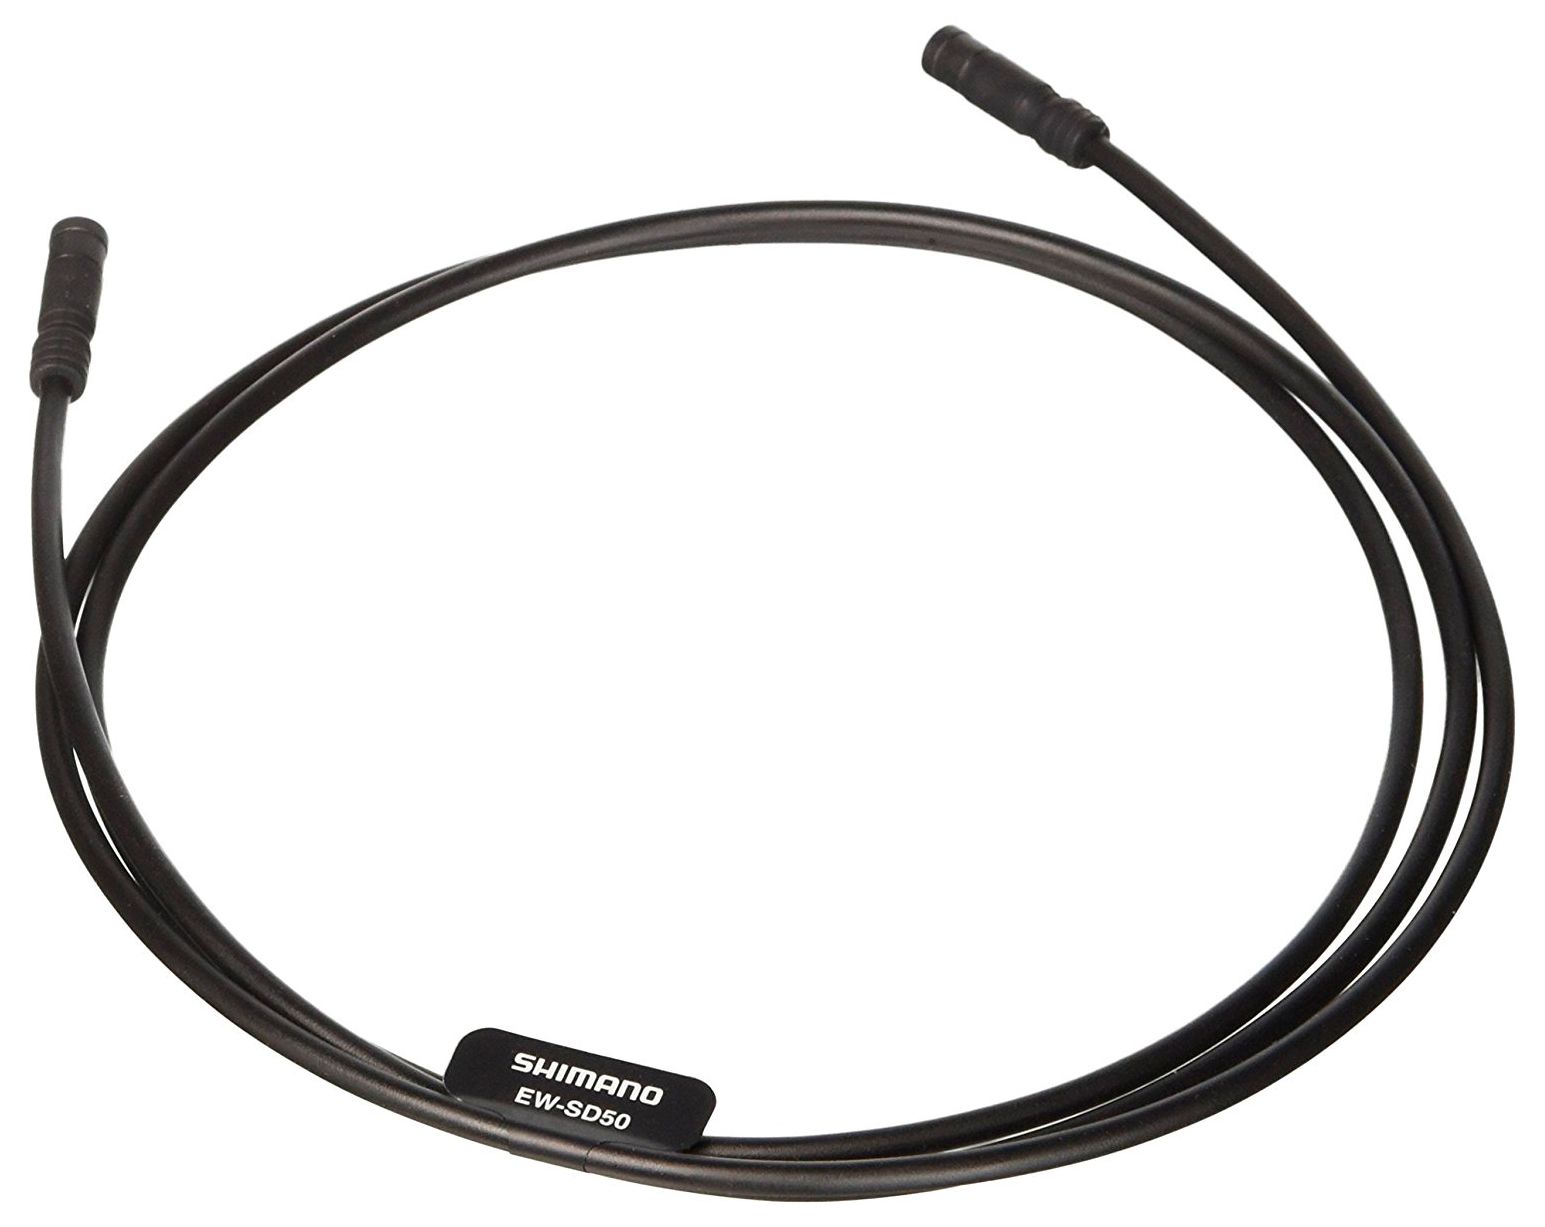  Комплектующие привода велосипеда Shimano электропровод EW-SD50, для Ultegra Di2, 1000 мм